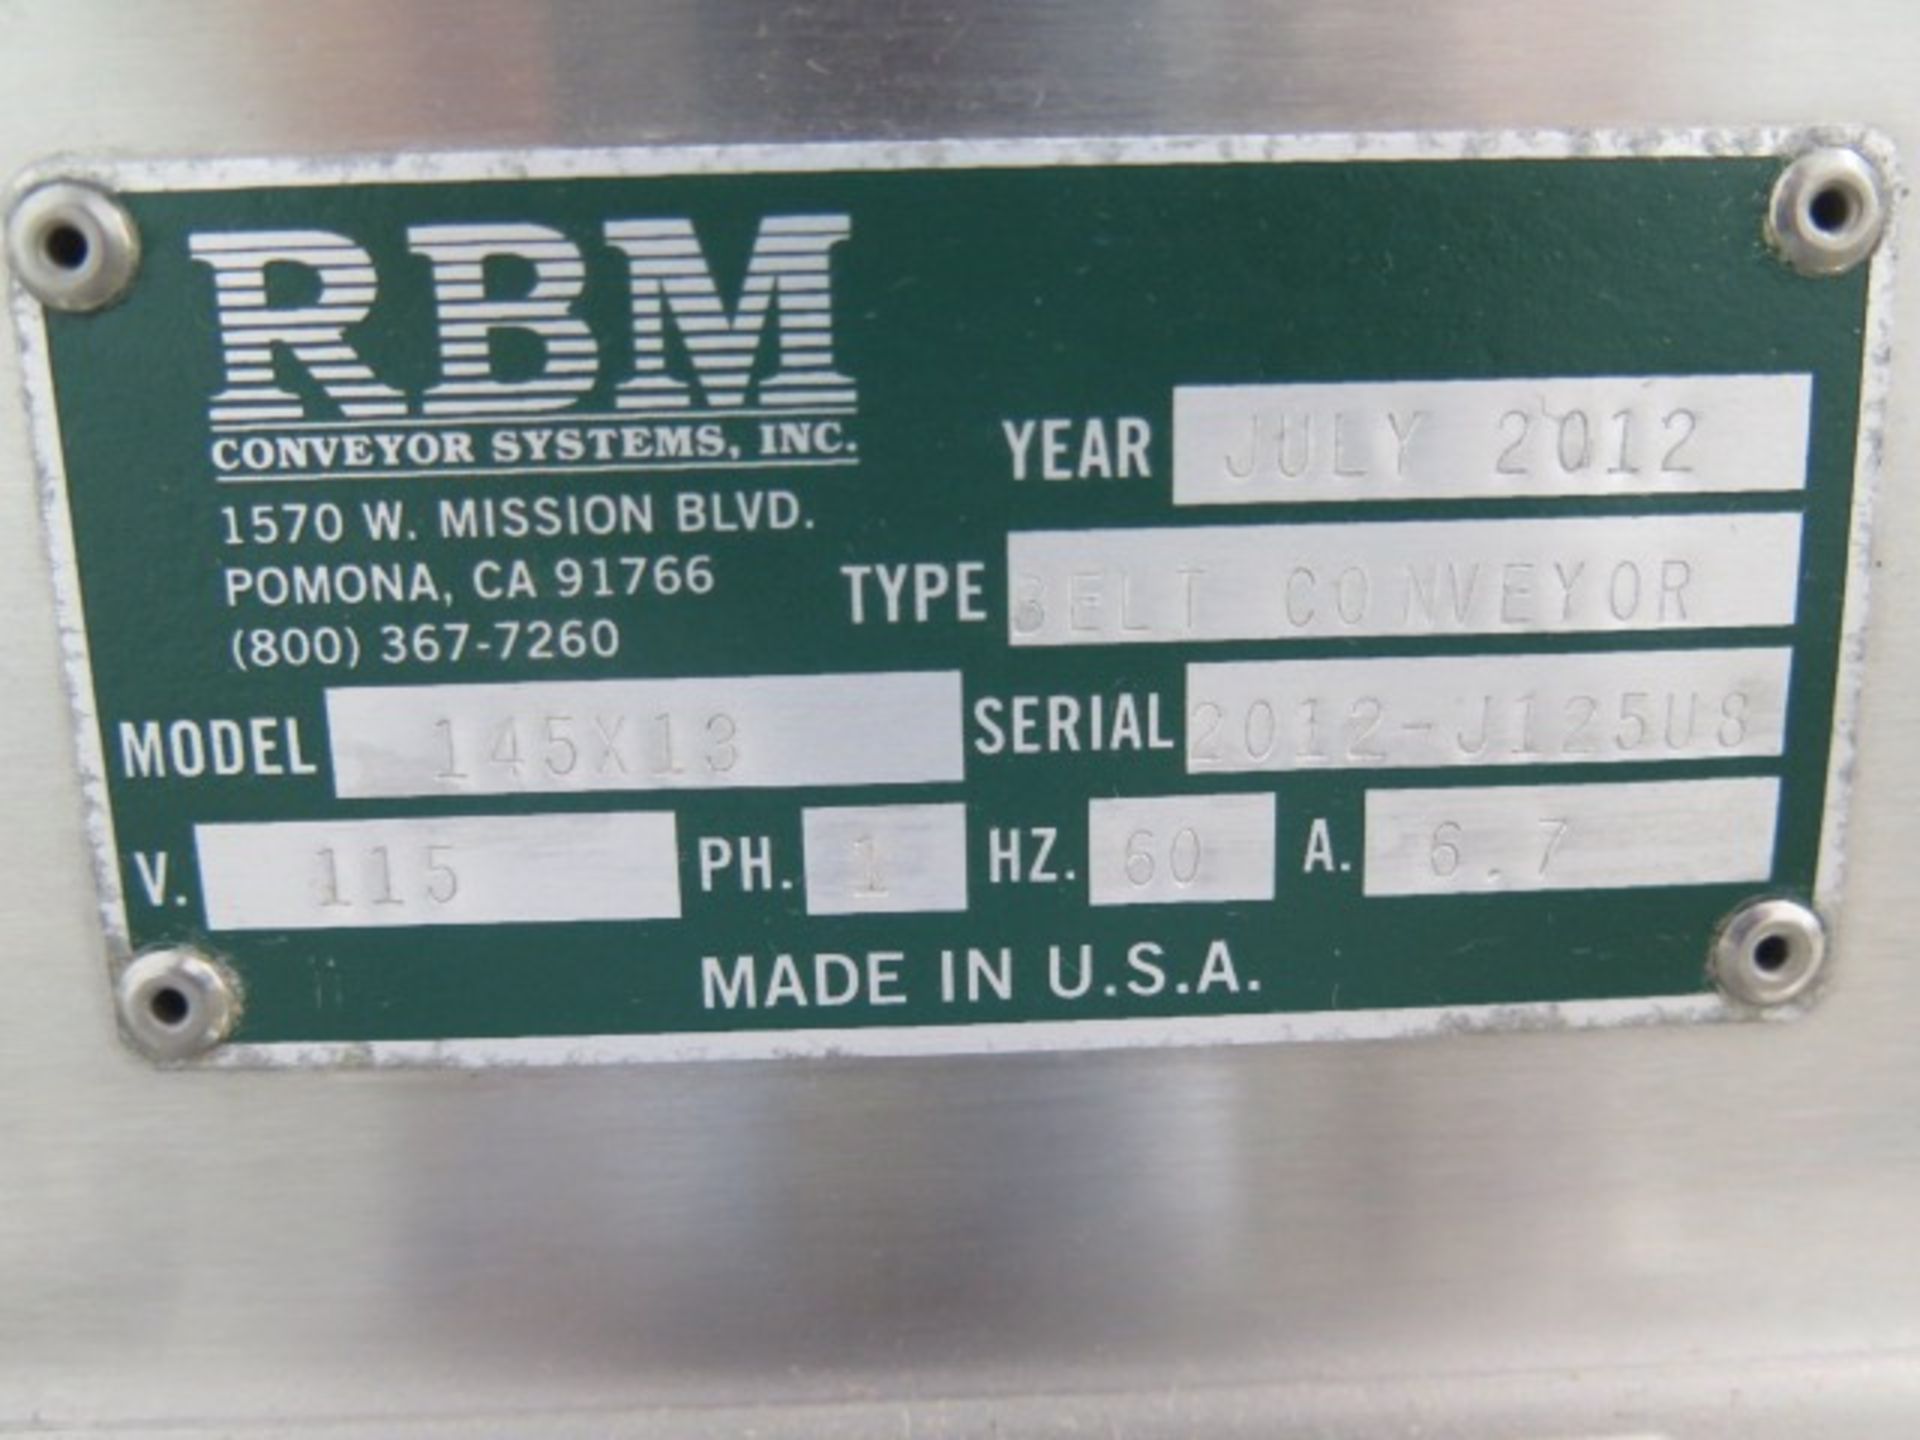 2012 RBM Model 145X13 Portable Power Belt Conveyor, S/N 2012-J125U8 with Casters | Rig Fee: $150 - Image 11 of 11